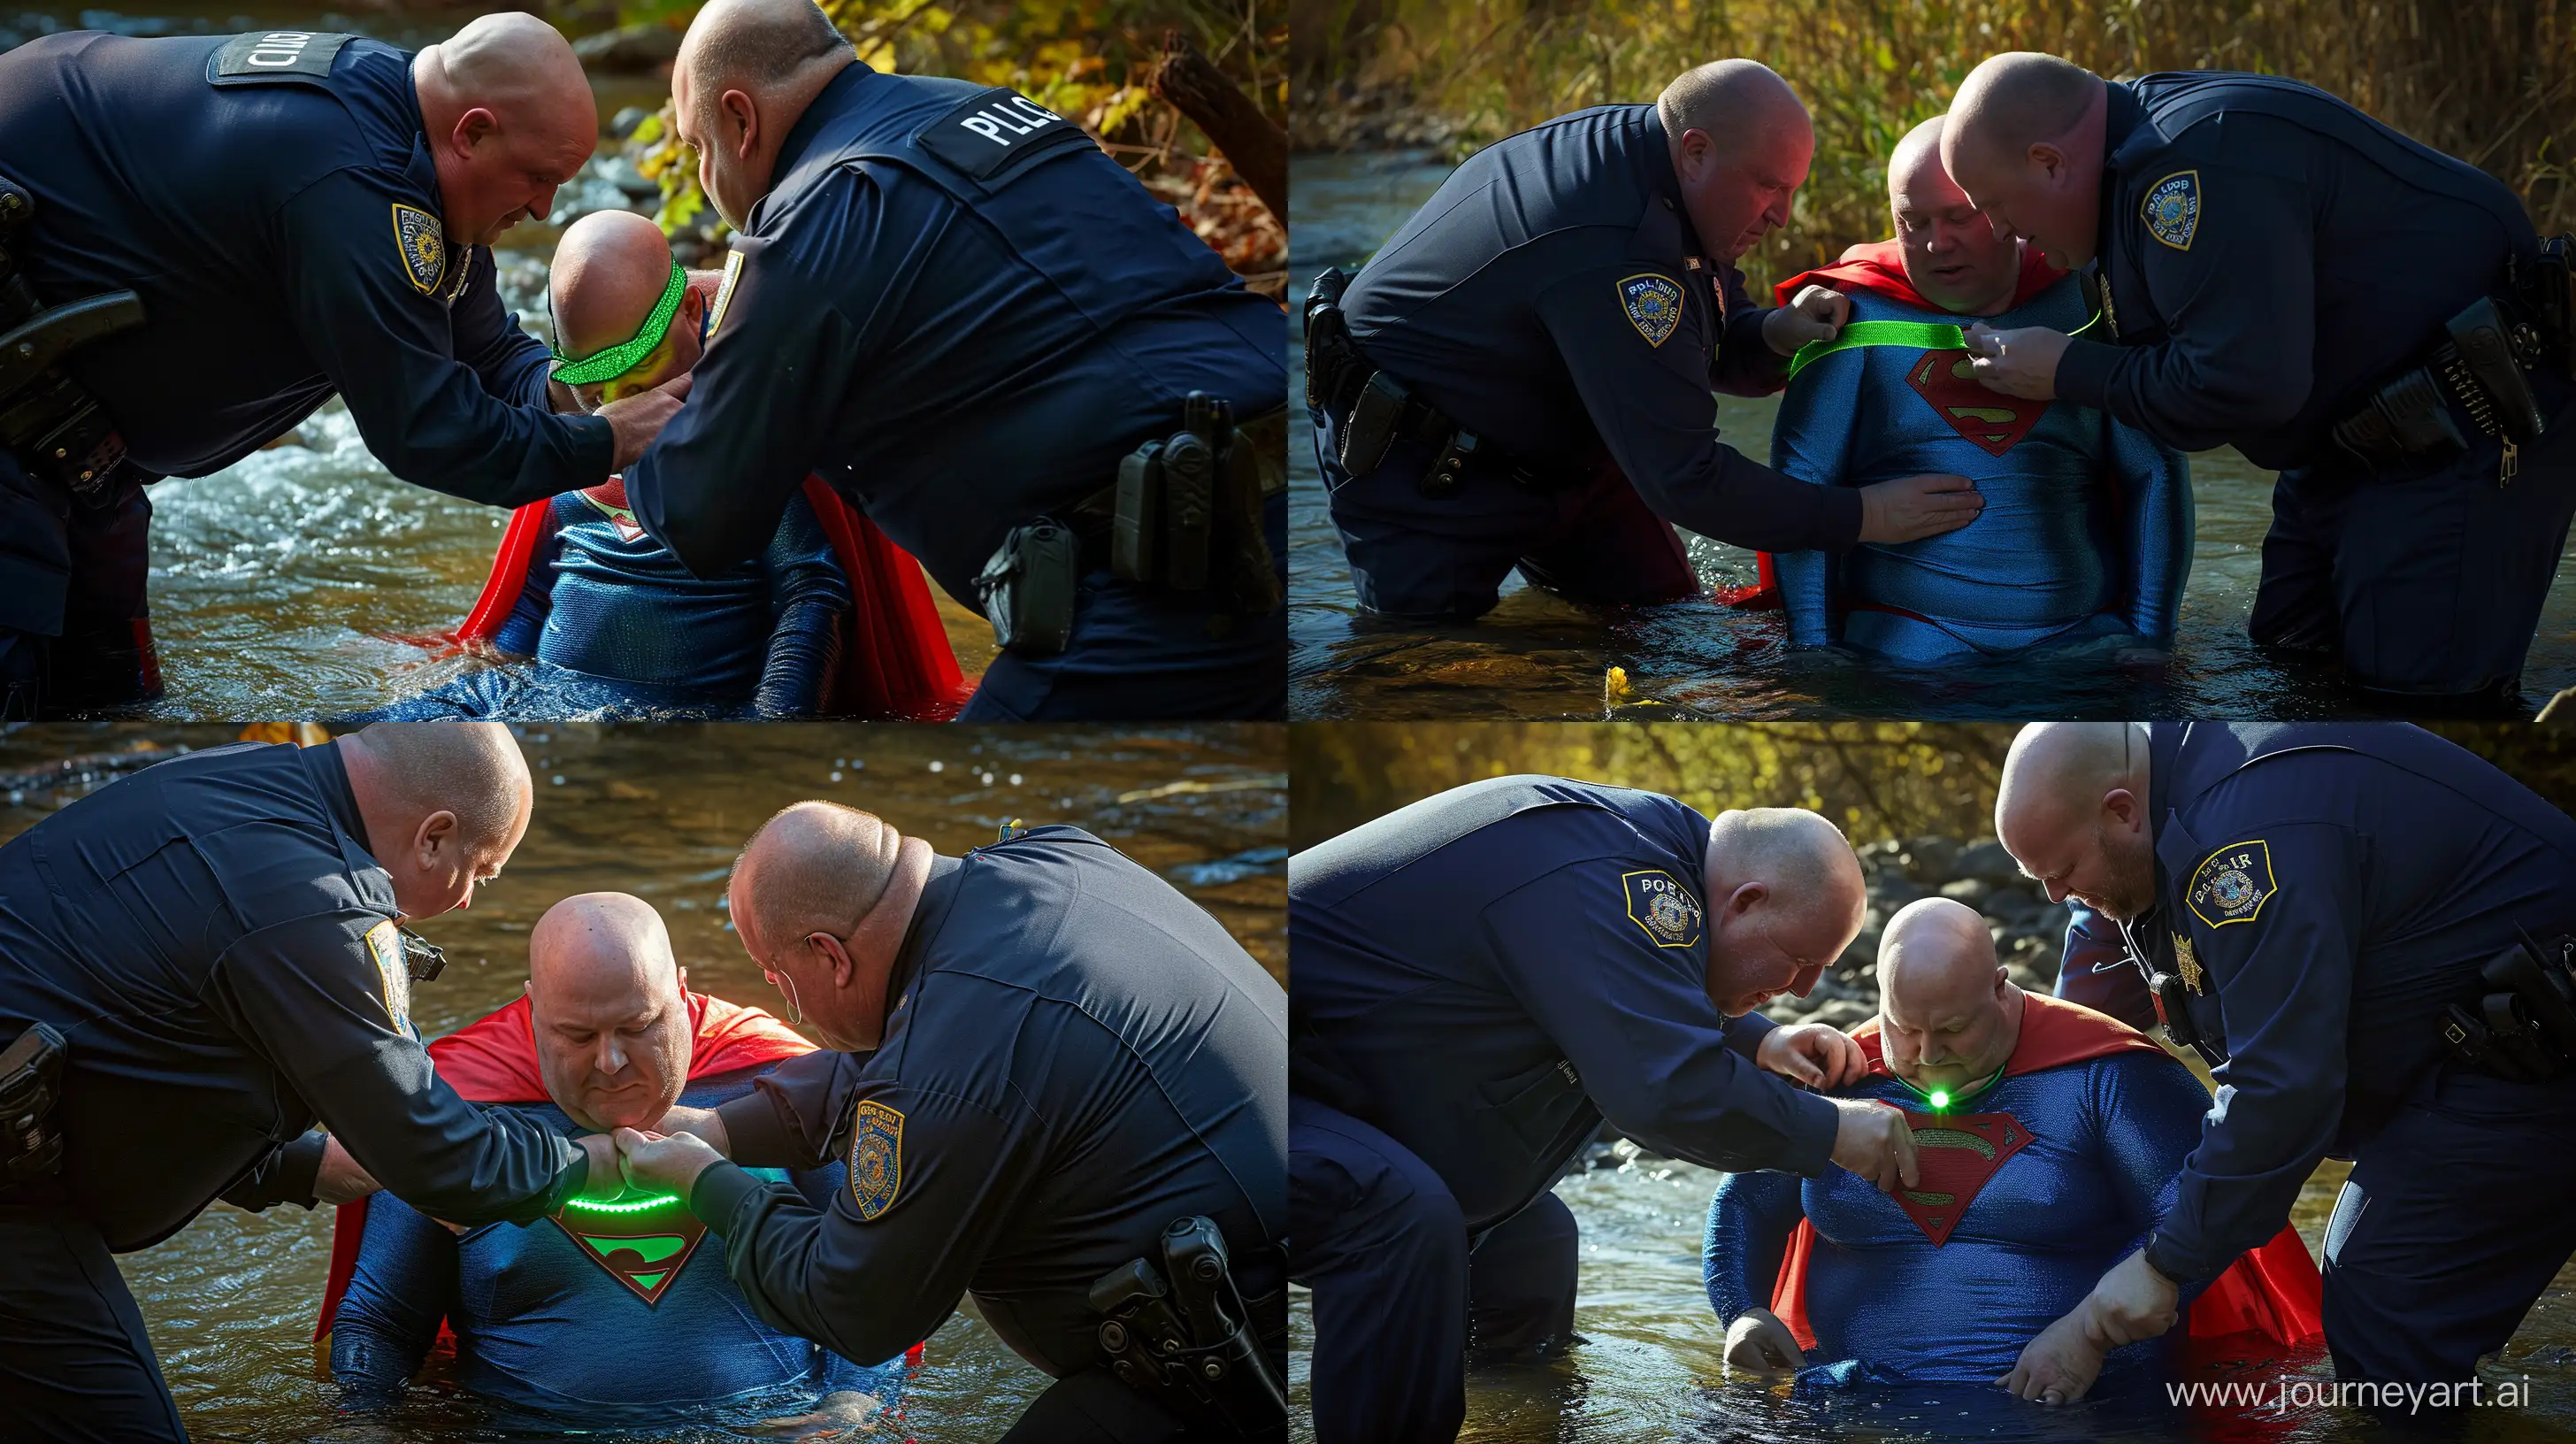 Elderly-Policemen-Secure-Green-Glowing-Collar-on-WaterSoaked-Superman